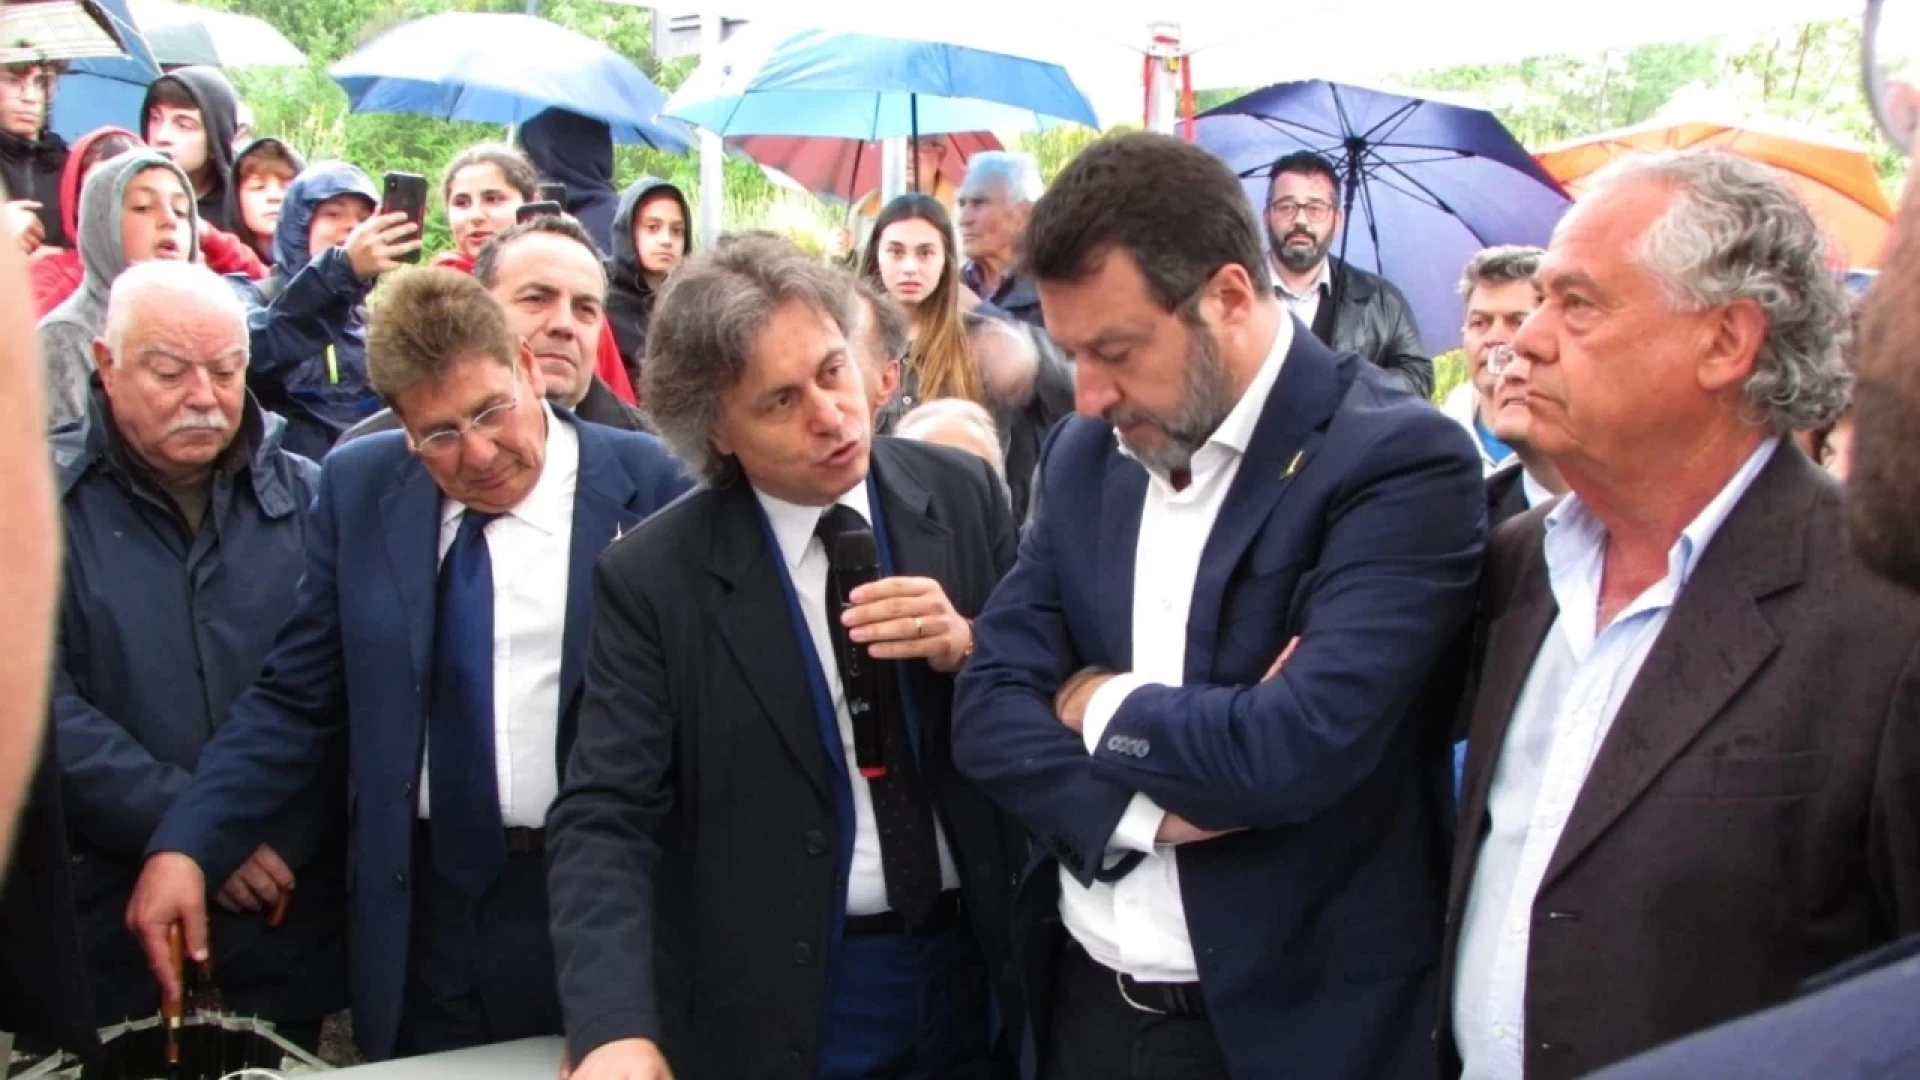 Regionali, Salvini torna in Molise. Appuntamenti a Termoli e ad Isernia.